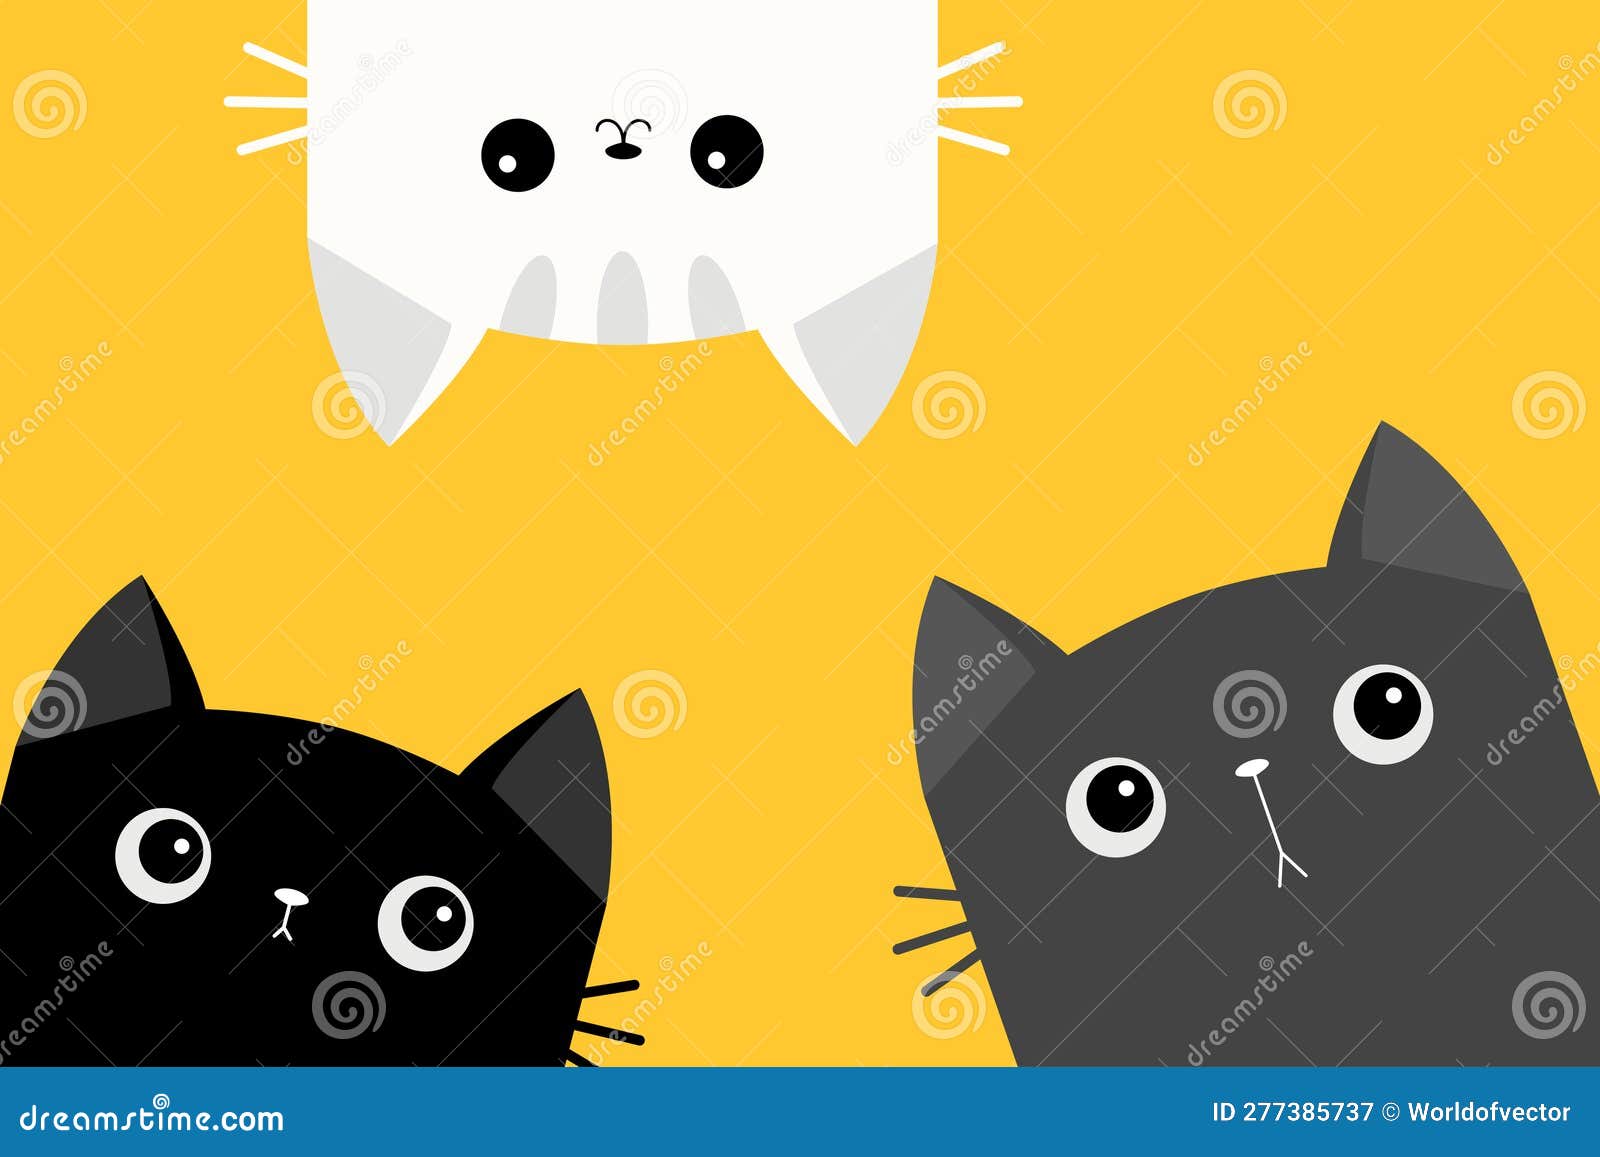 Cute Cat Icon. Gray Kitten Face Head Silhouette. Funny Kawaii